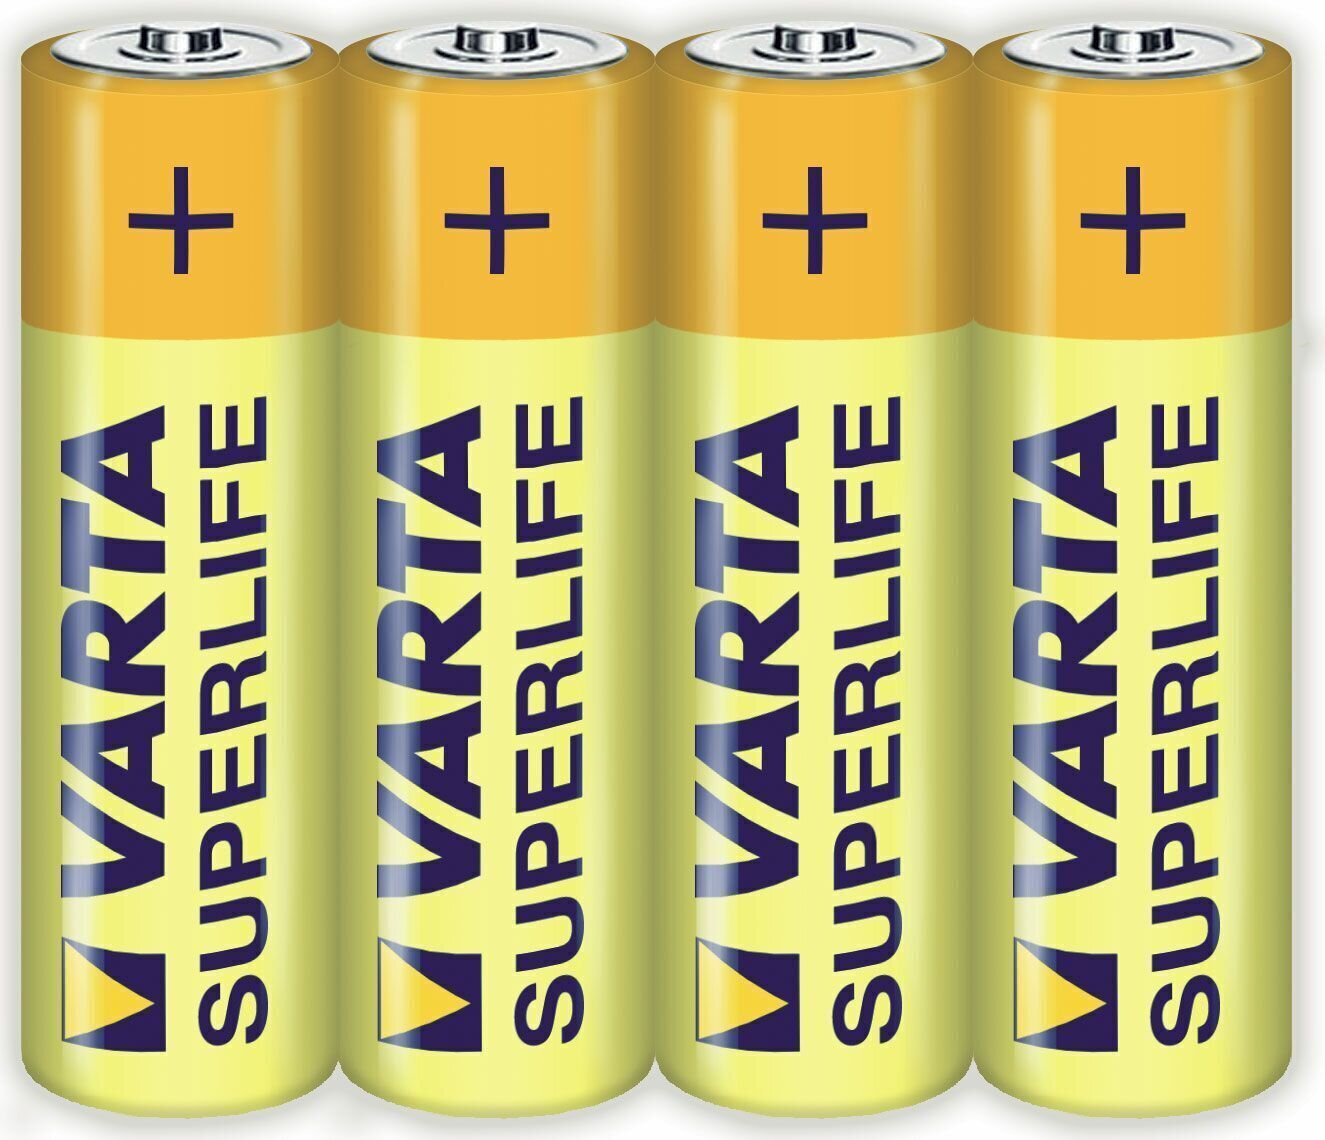 AA Batterien Varta R06 Superlife 4